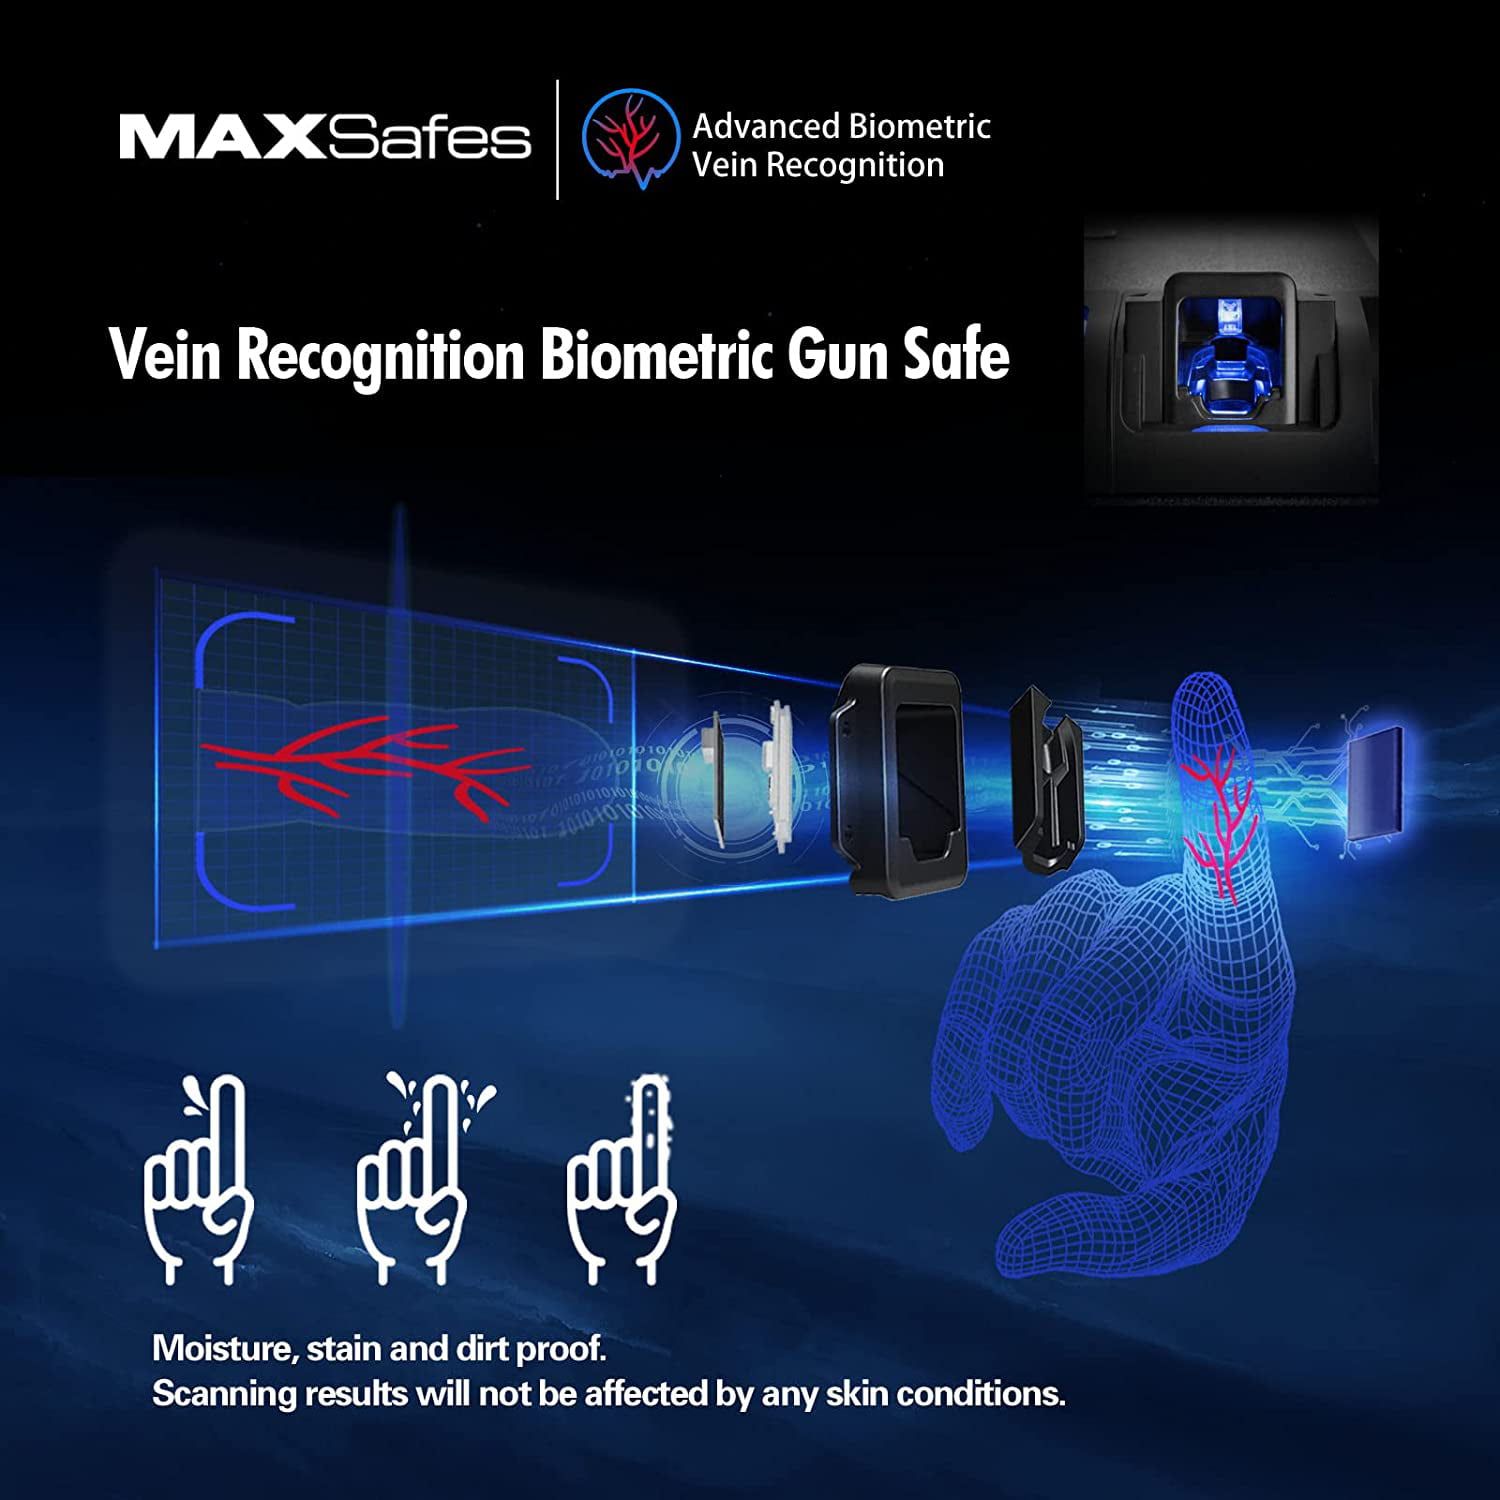 Safe High Capacity Home Recognition Two Super Pistol MAXSafes Vein & Gun with Fingerprint Quick-Access Biometric Car Finger for Vault Lock, Handgun Safe,